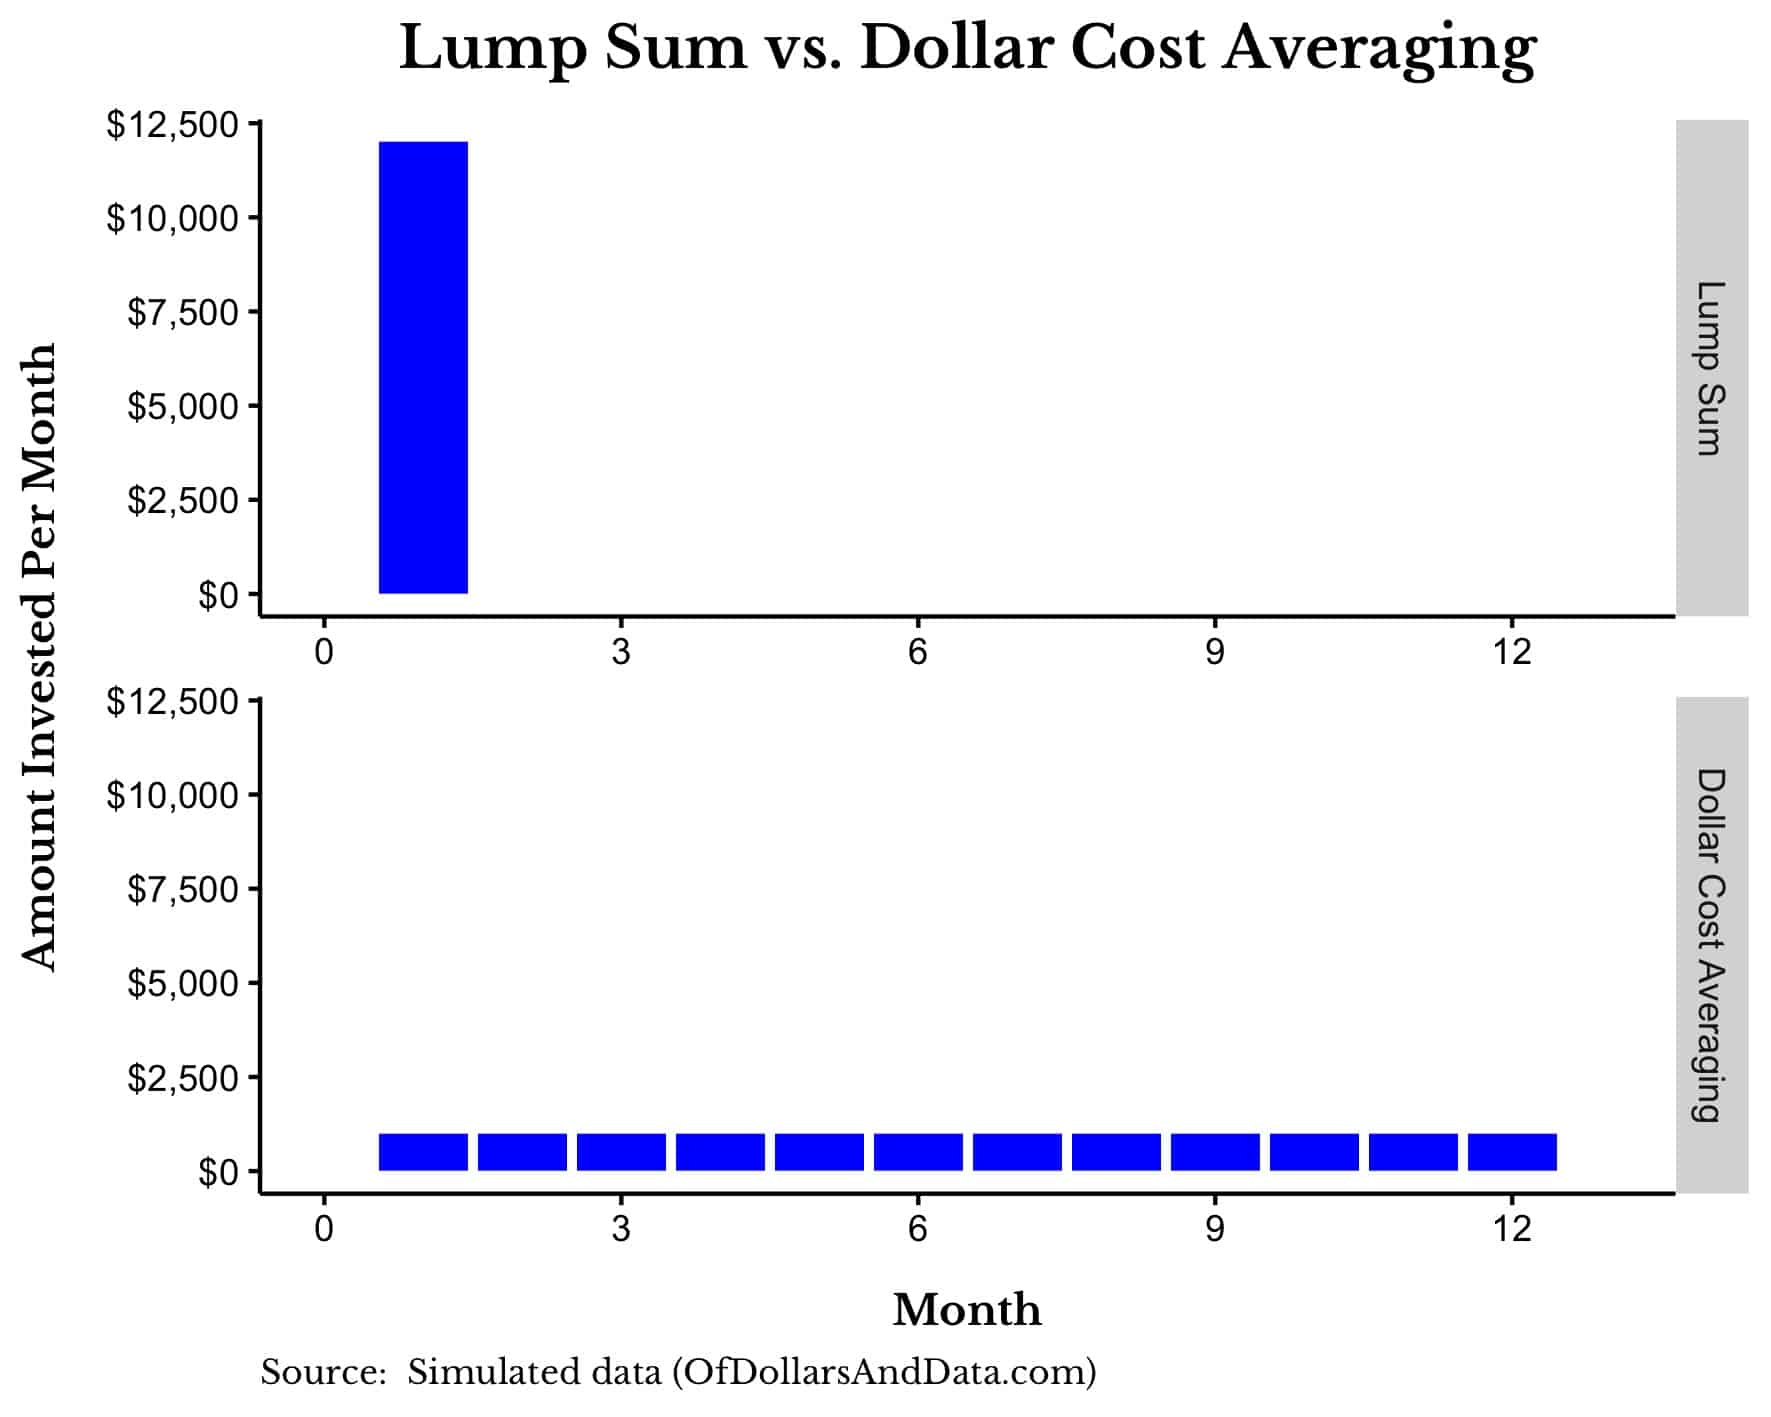 Visual explaining lump sum versus dollar cost averaging over a 12-month basis.